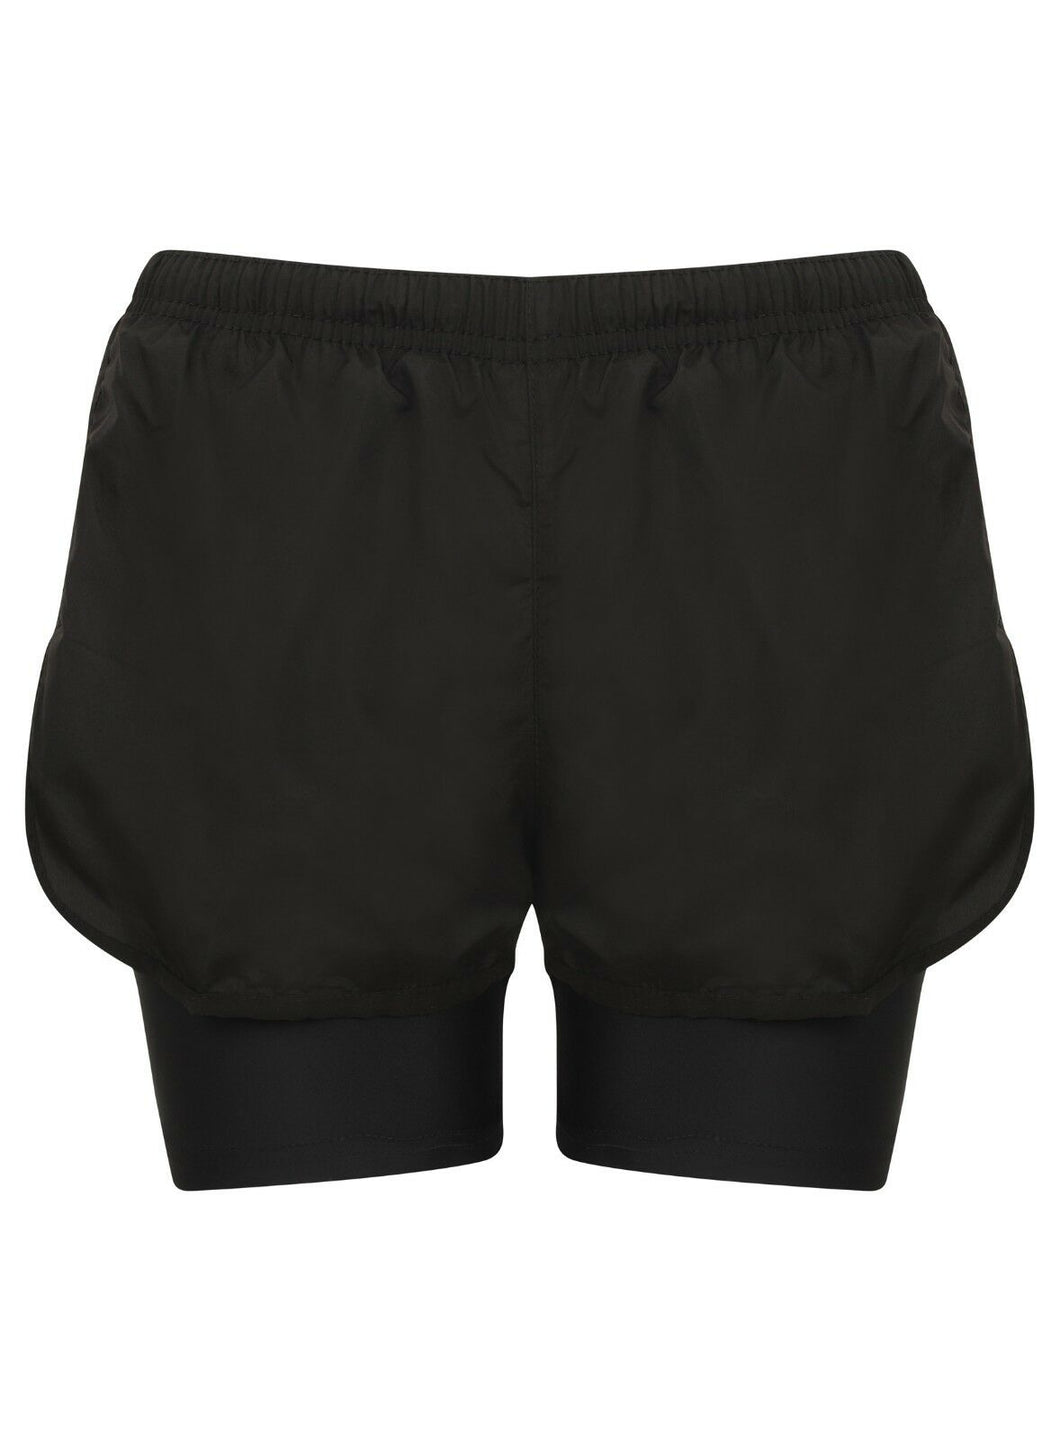 Athletic Sportswear Ladies Shorts 2 in 1 Running Shorts Black/Black